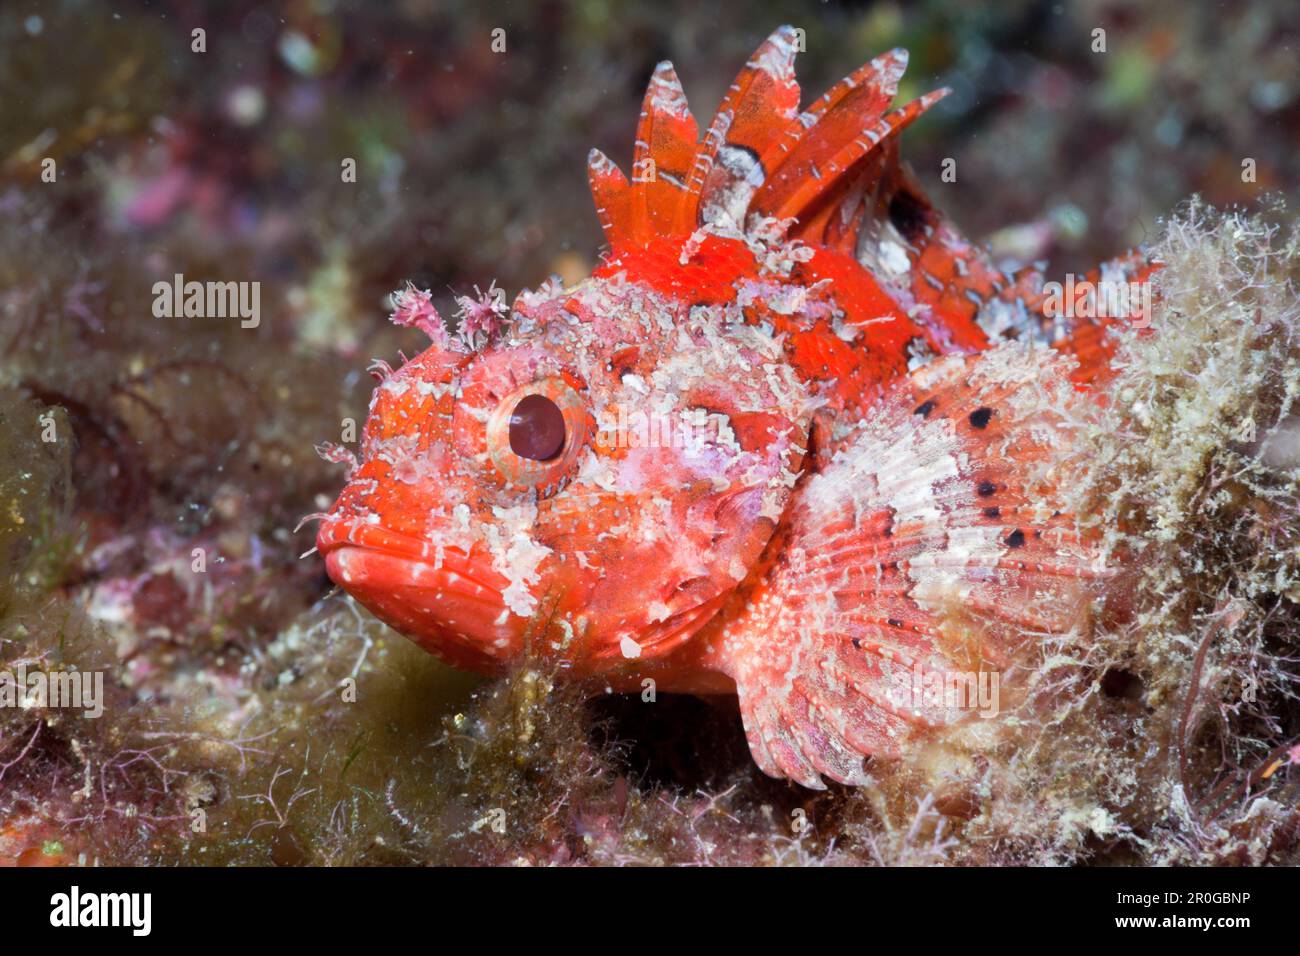 Lesser Red Scorpianfish, Scorpaena notata, Tamariu, Costa Brava, Mediterranean Sea, Spain Stock Photo